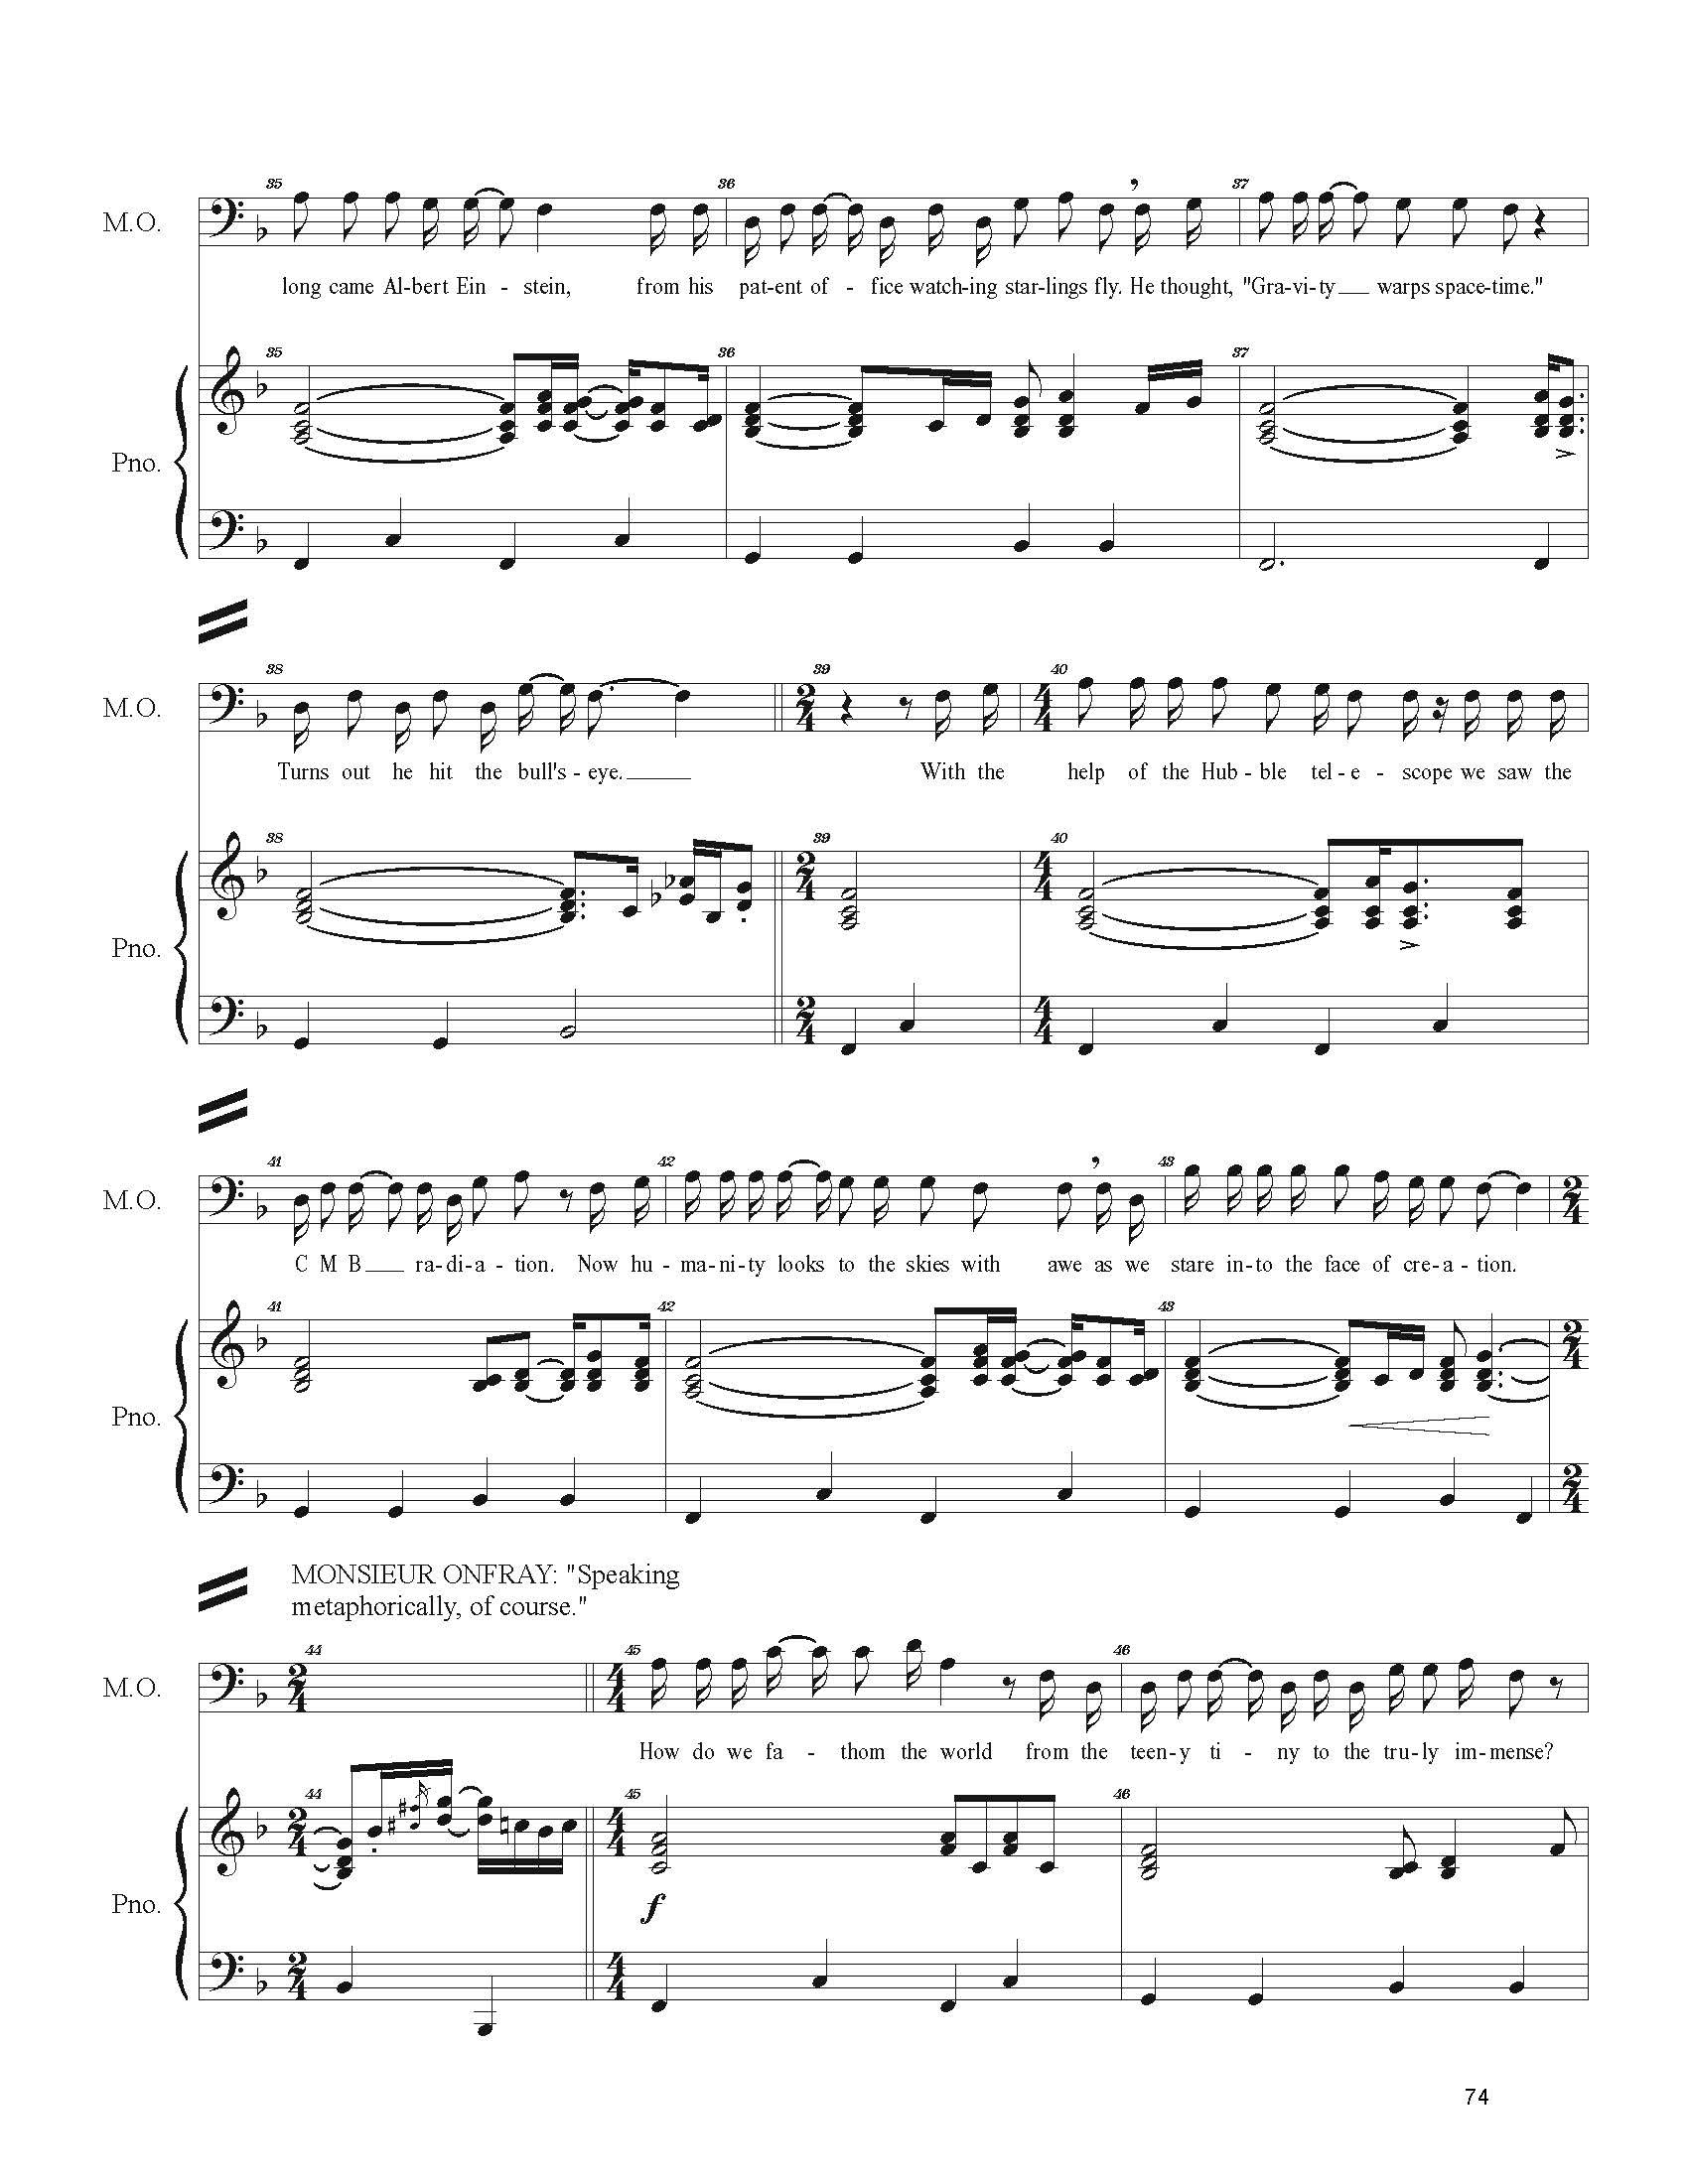 FULL PIANO VOCAL SCORE DRAFT 1 - Score_Page_074.jpg